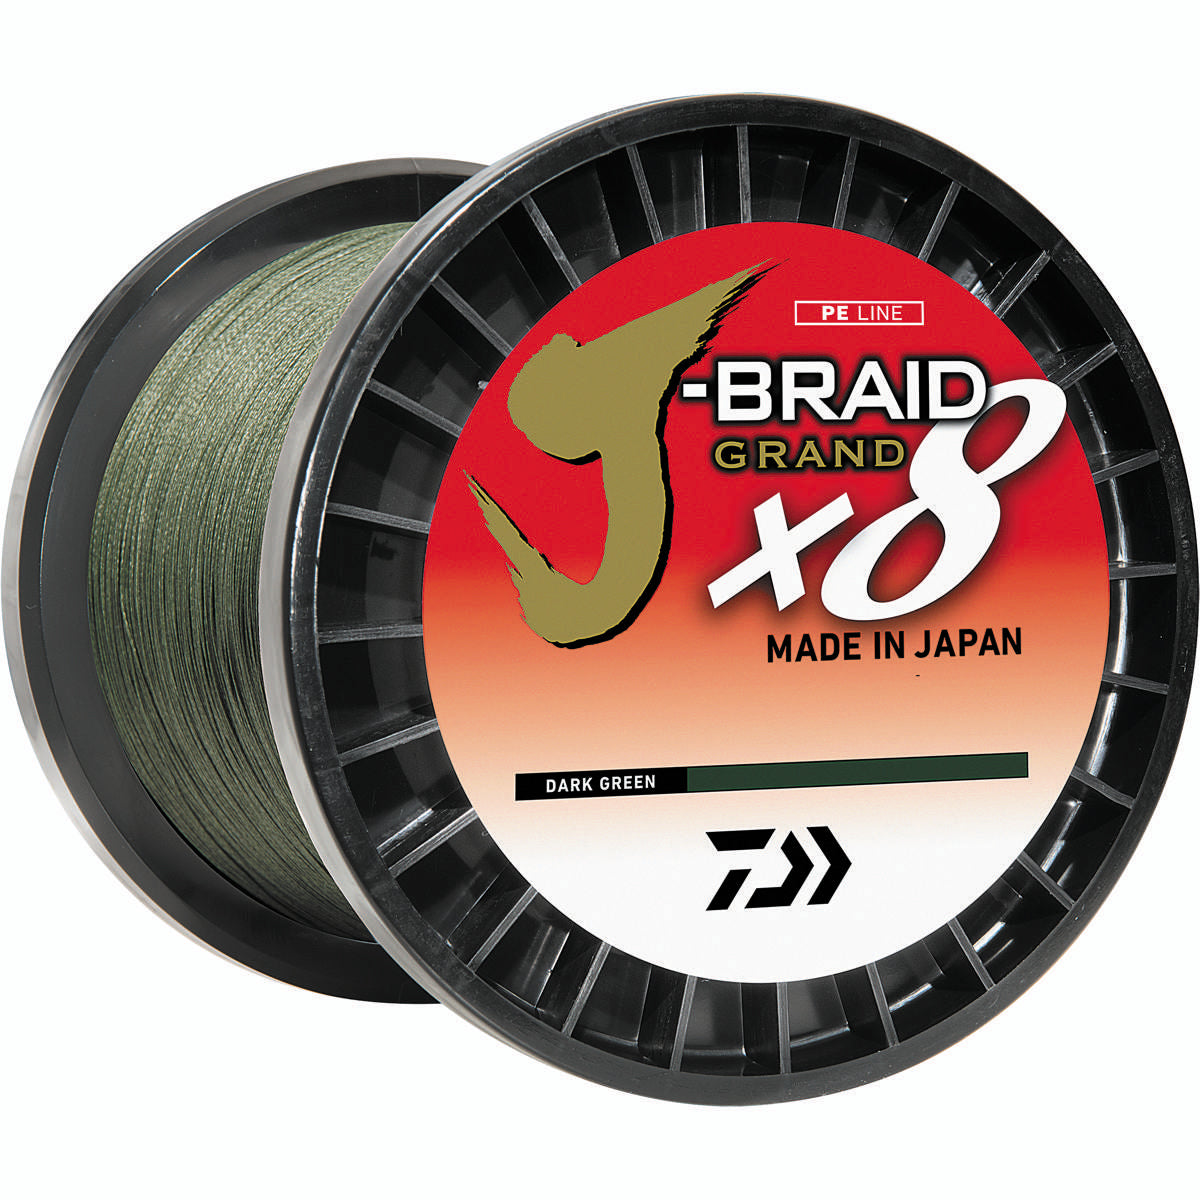 Photo of Daiwa J-Braid x8 Grand Braided Line for sale at United Tackle Shops.